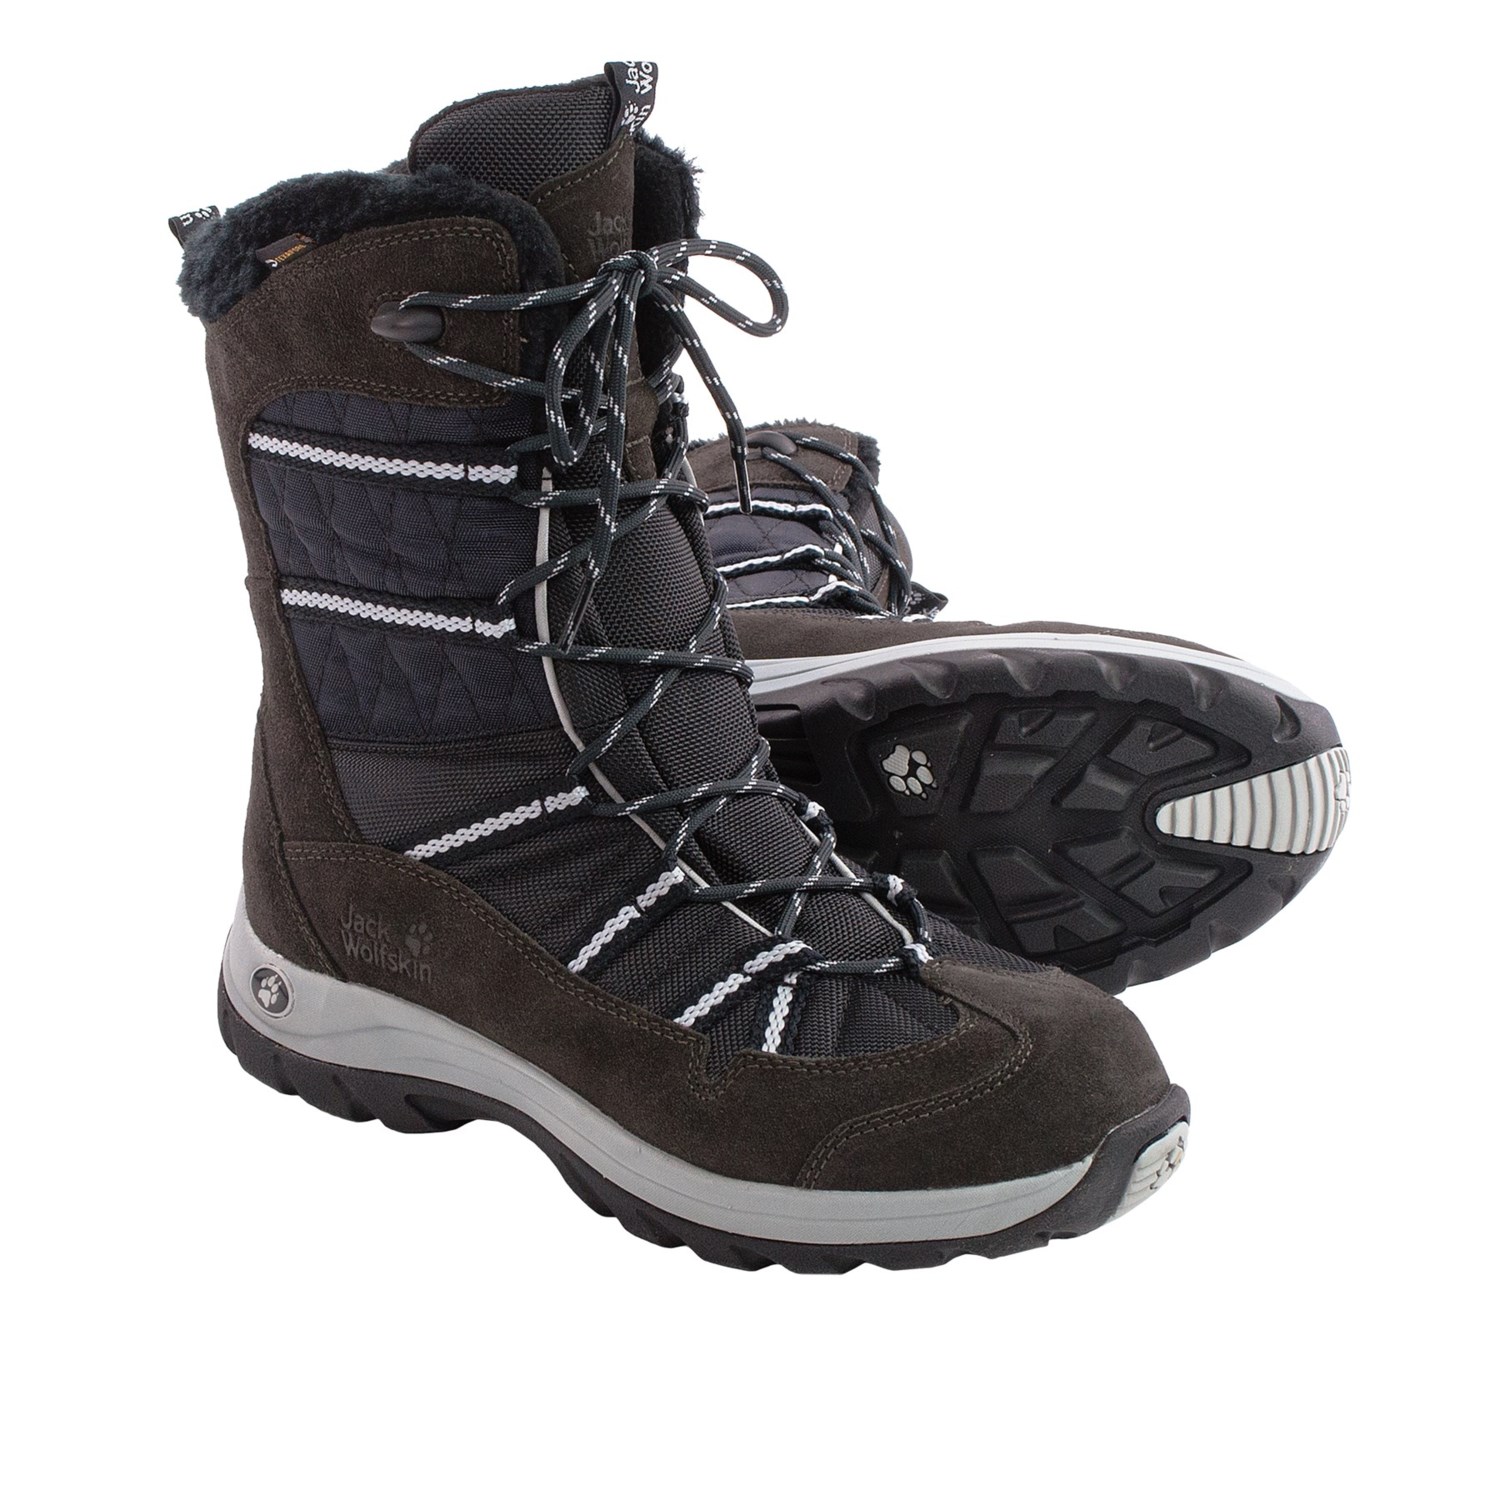 Cheap Waterproof Snow Boots Uk | Santa Barbara Institute for ...